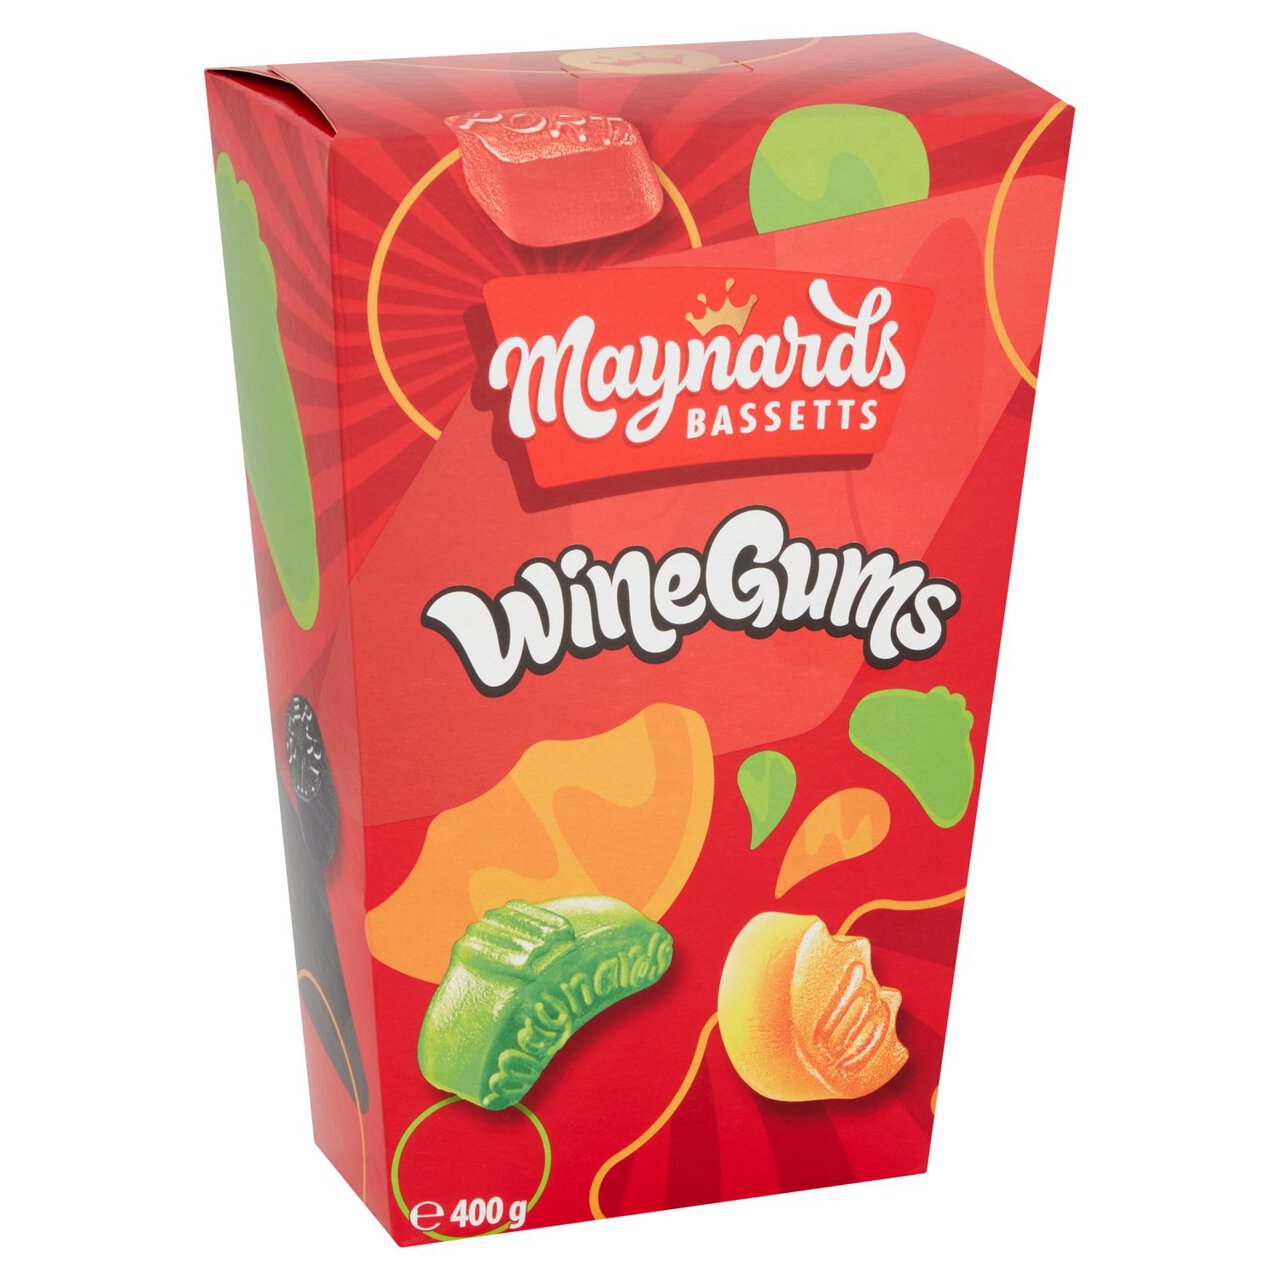 Maynards Bassetts Wine Gums Sweets Carton 400g